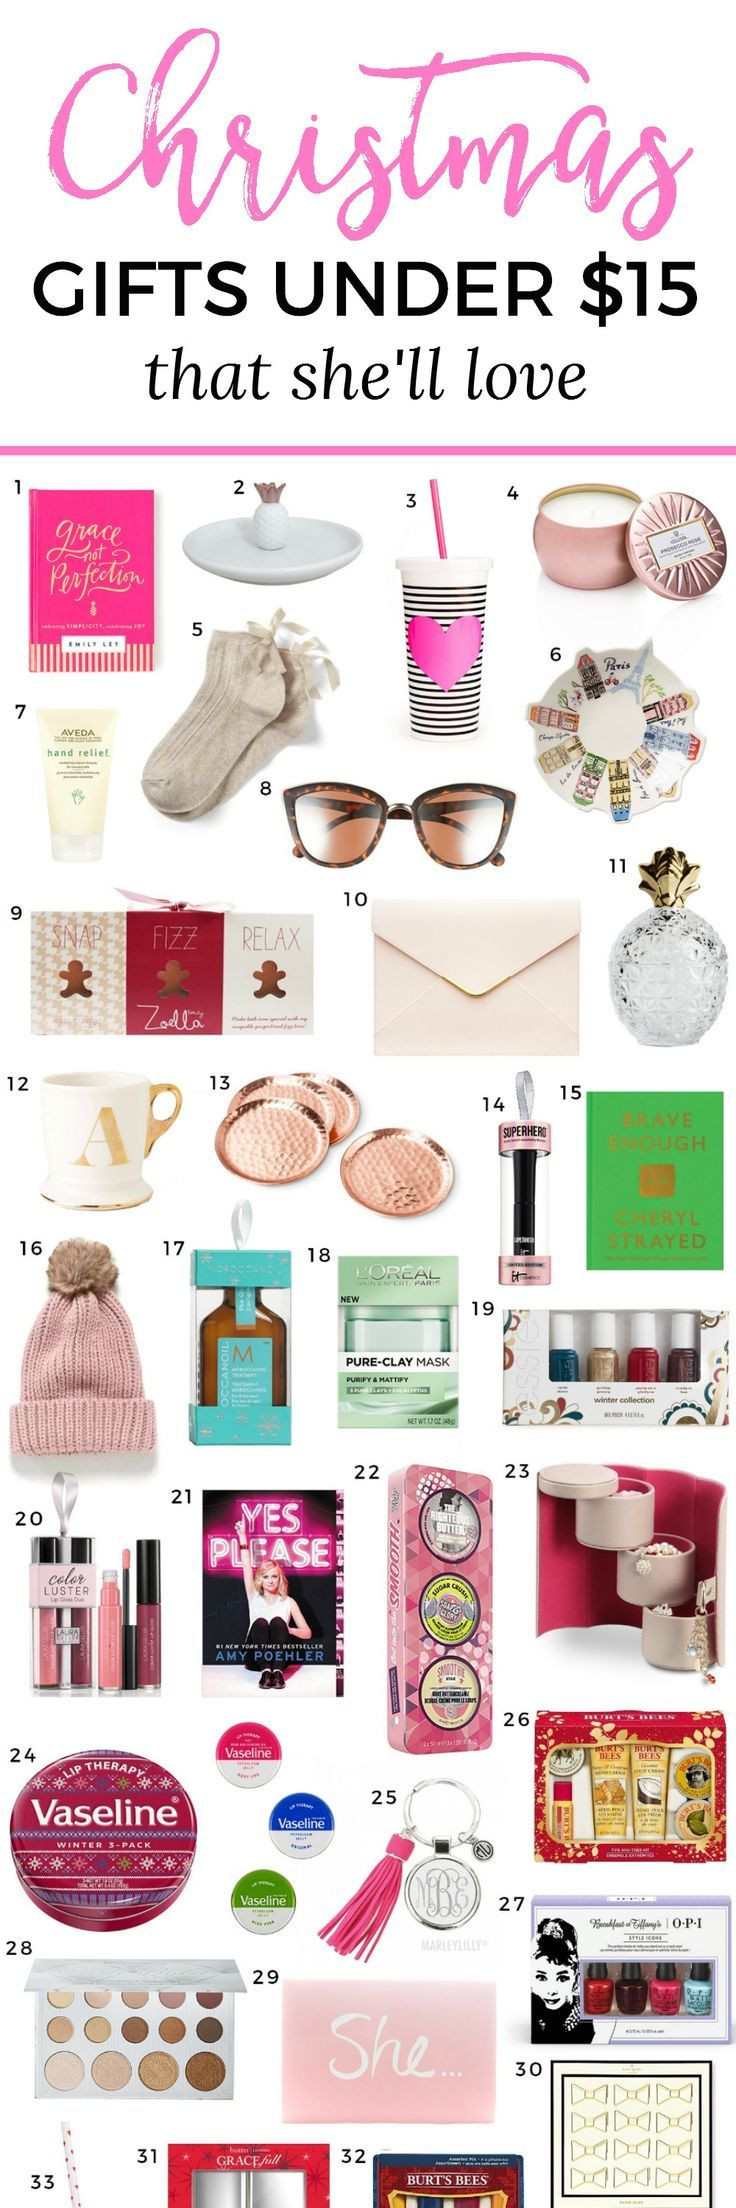 Christmas Gift Ideas For Friends Female
 Best 25 Small ts for women ideas on Pinterest